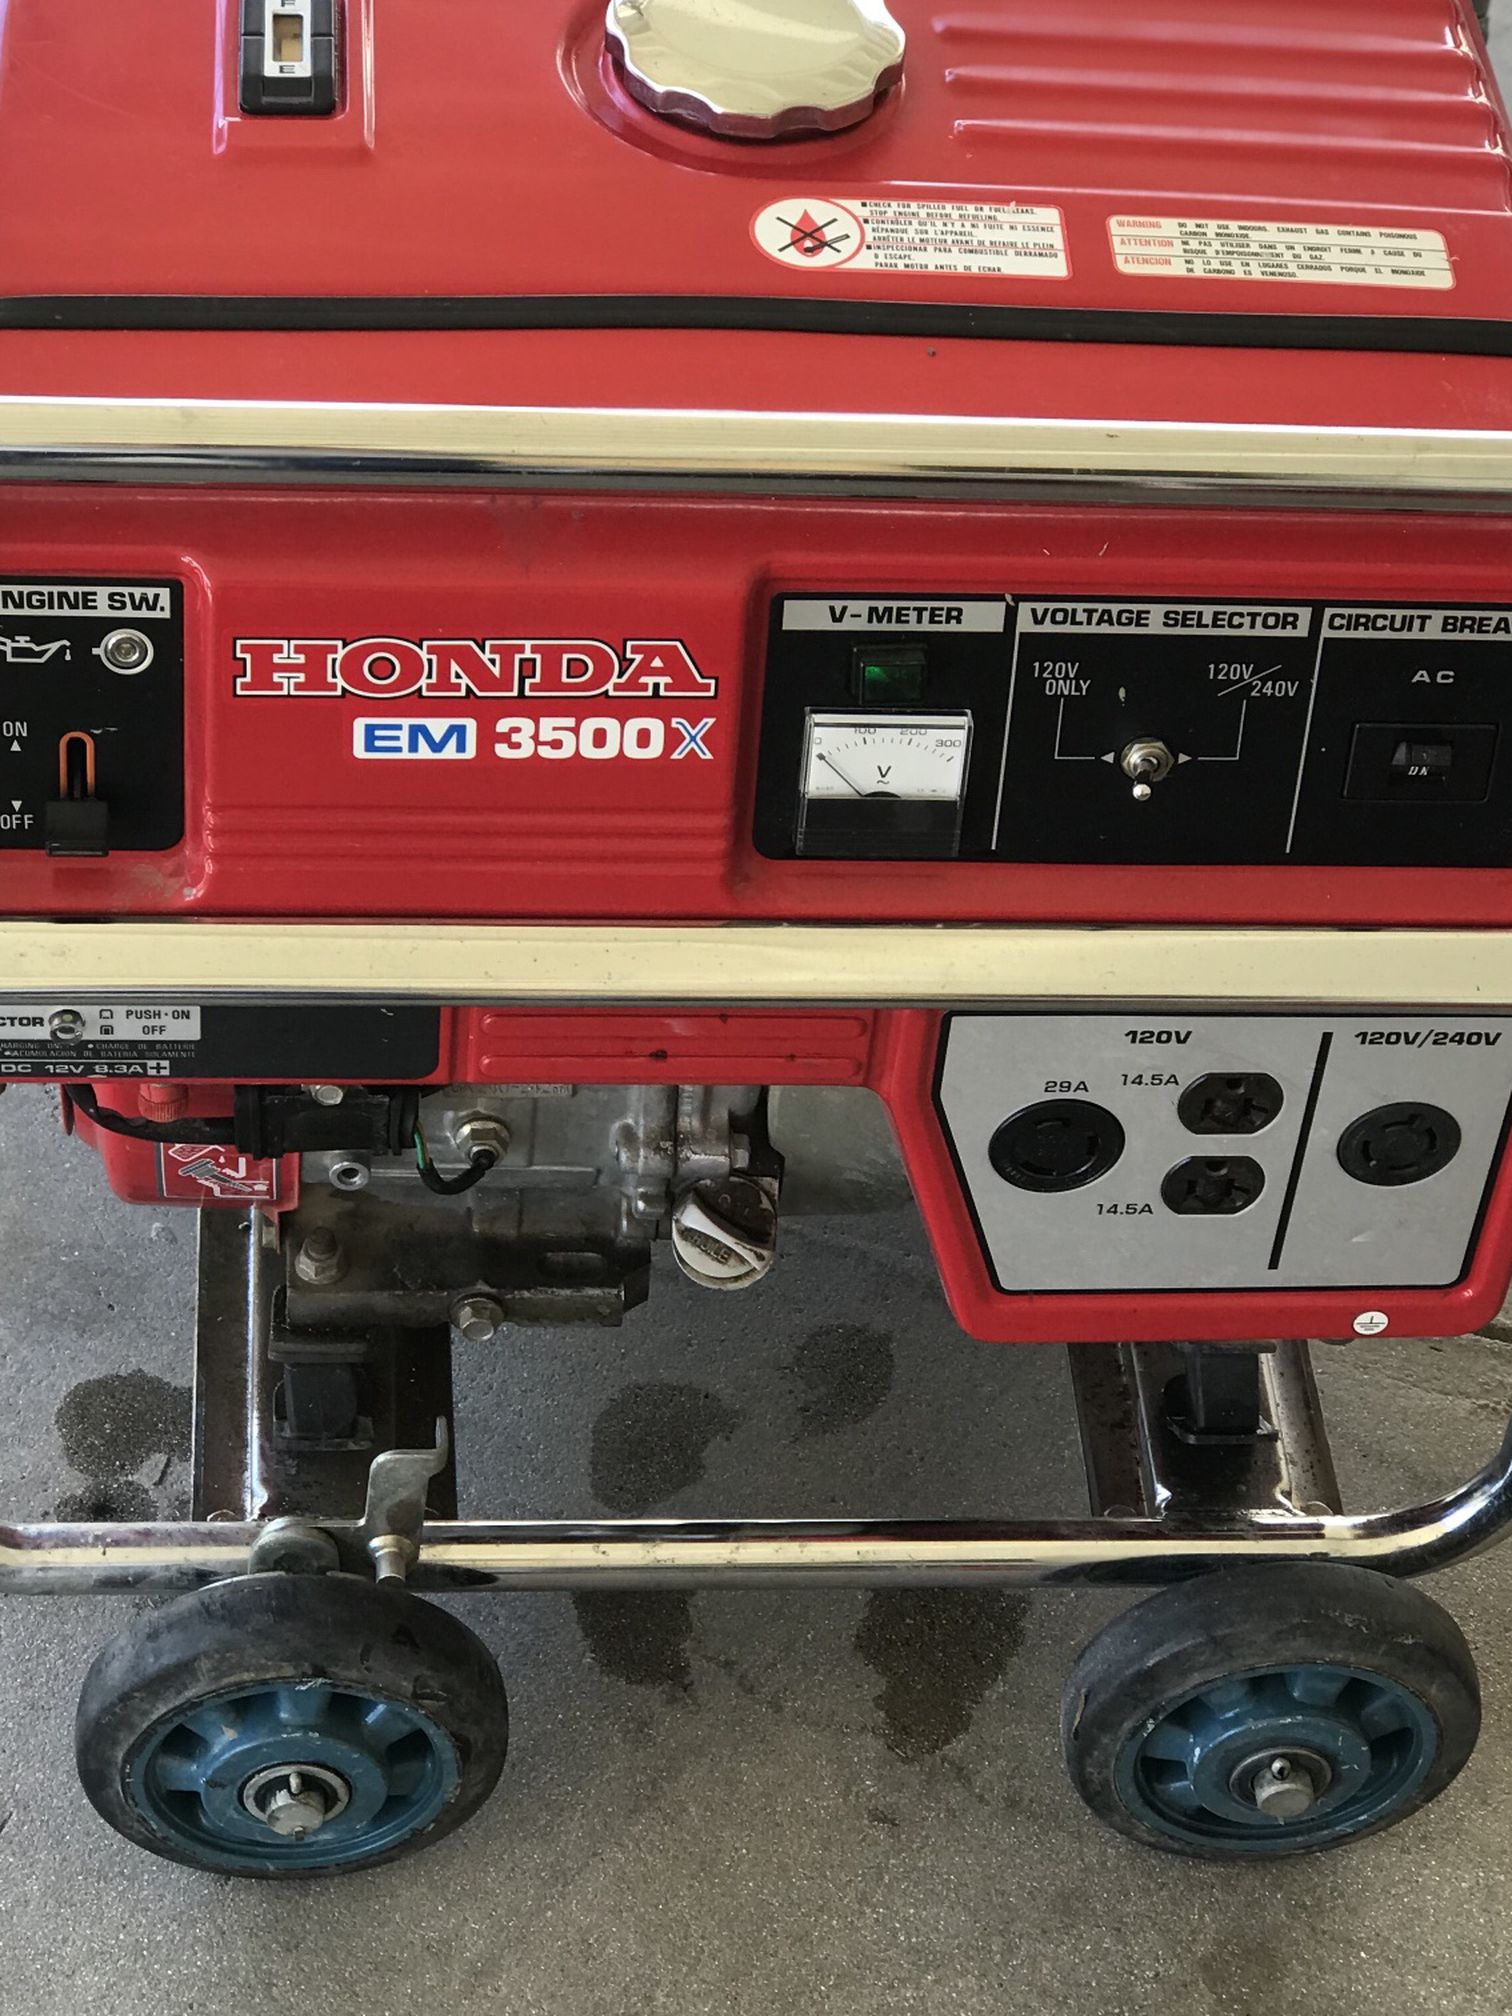 Honda EM3500x 120/240 Gas Generator In Excellent Working Condition